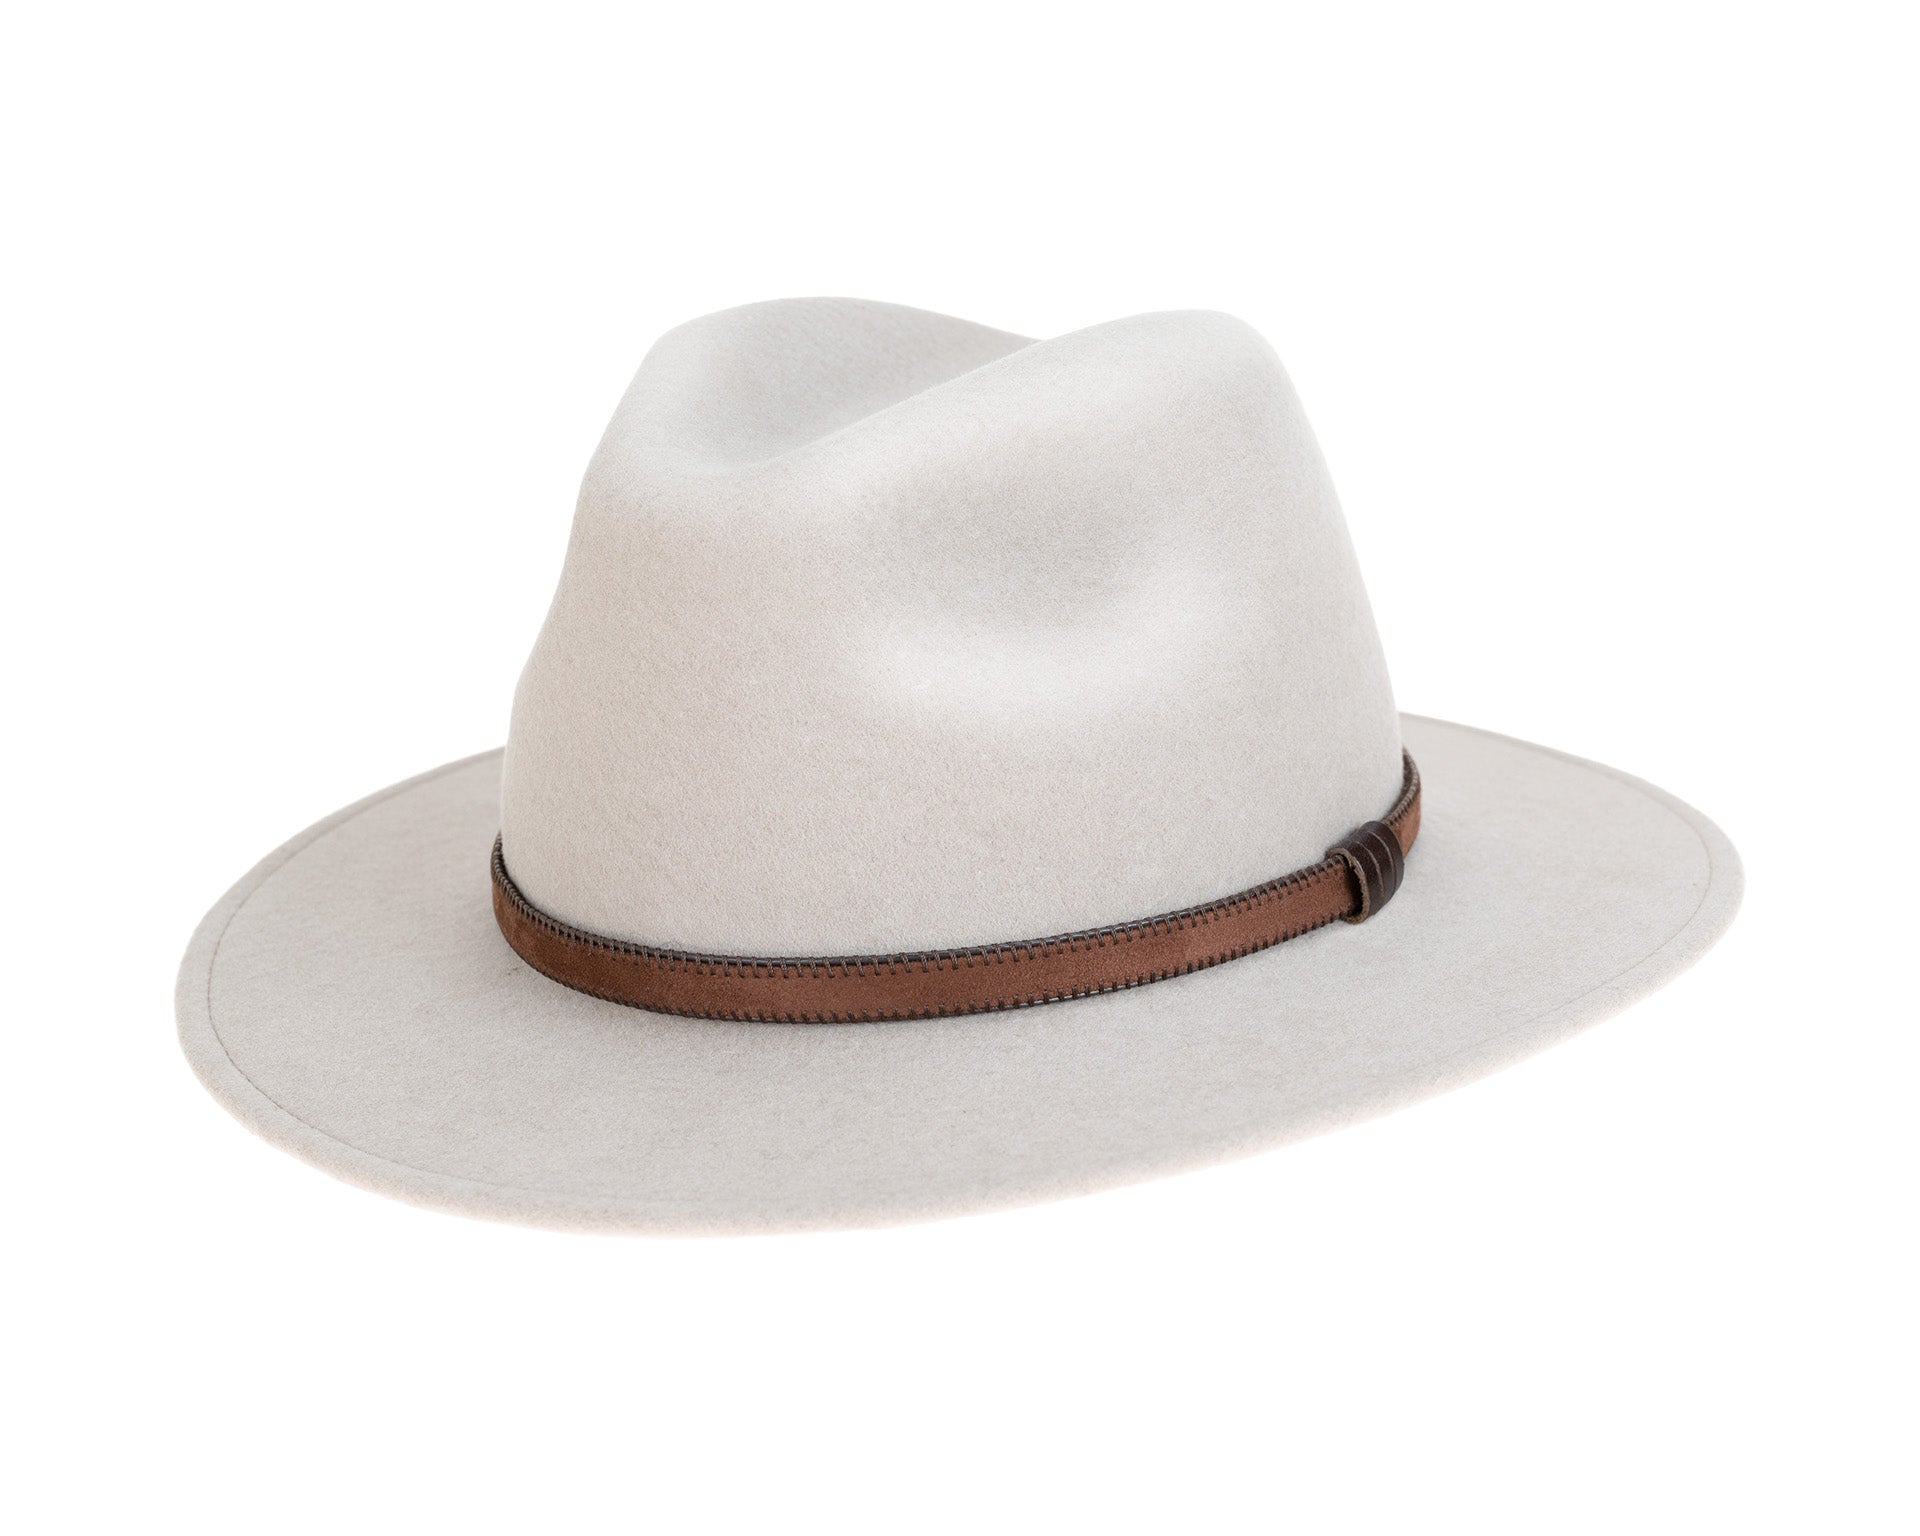 Panama Straw Blue Fedora Hat | Ronnel, X-Small (54cm)